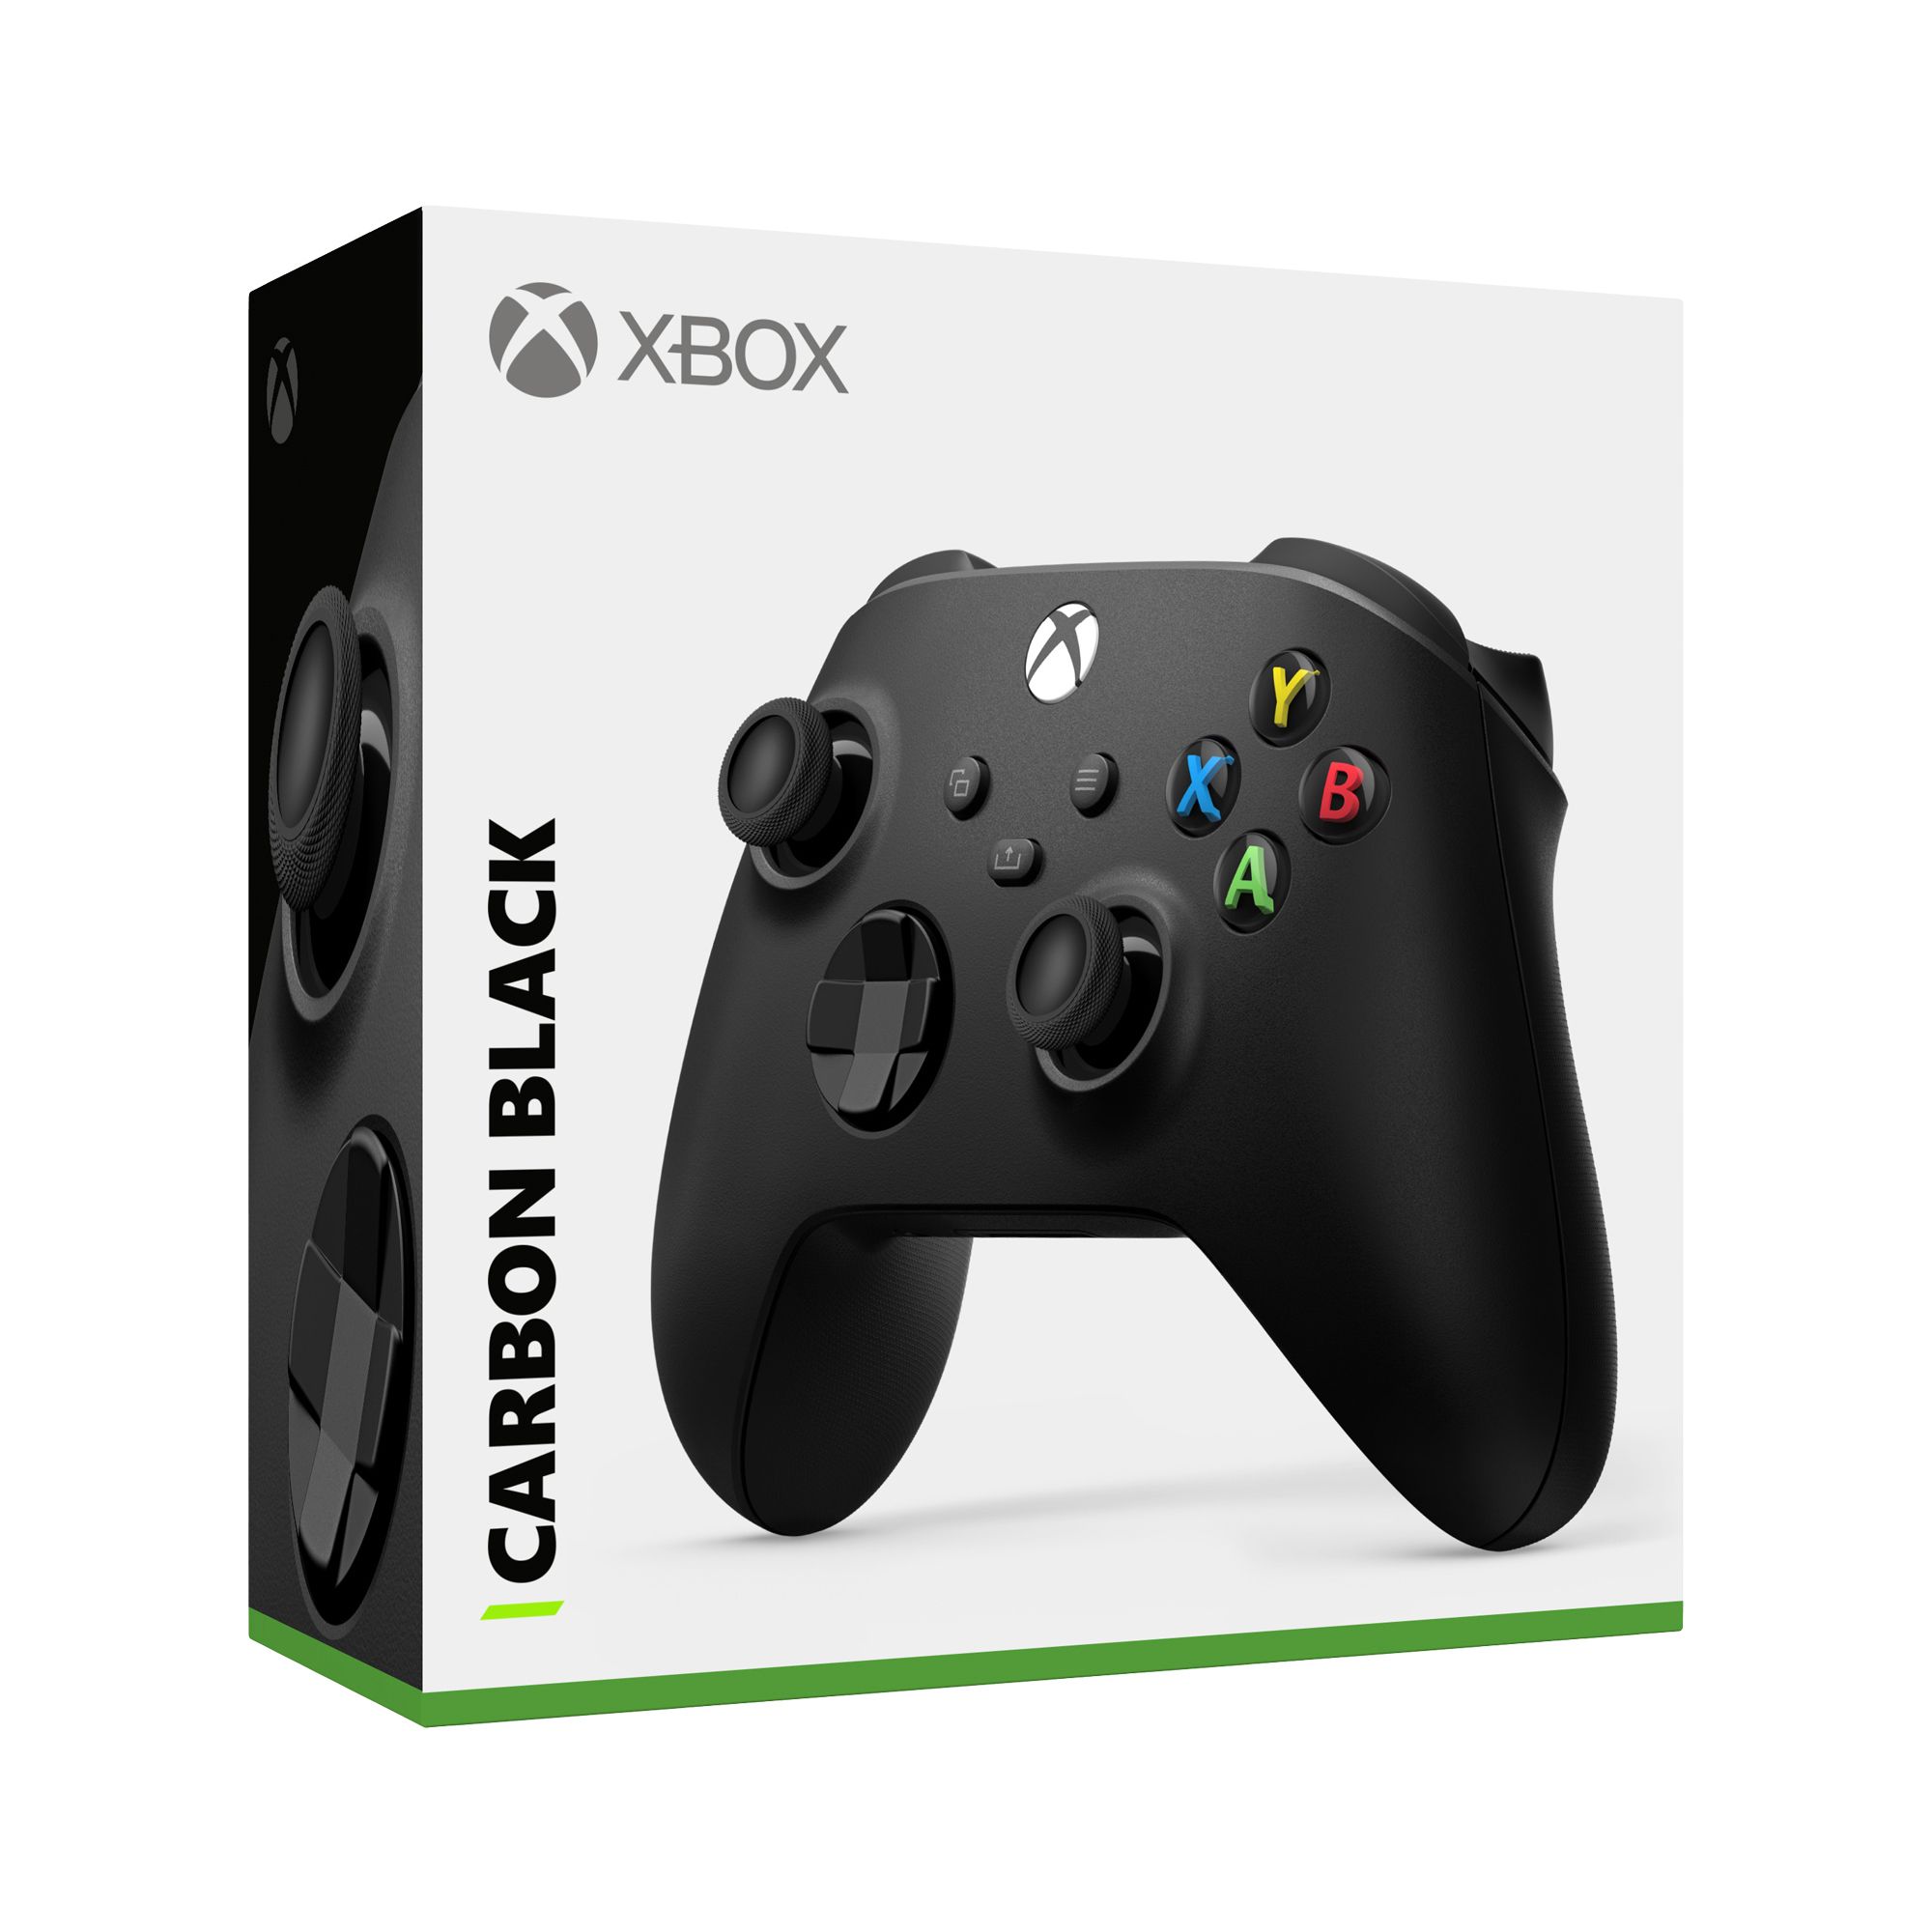 Xbox Series S/X Controller - Carbon Black